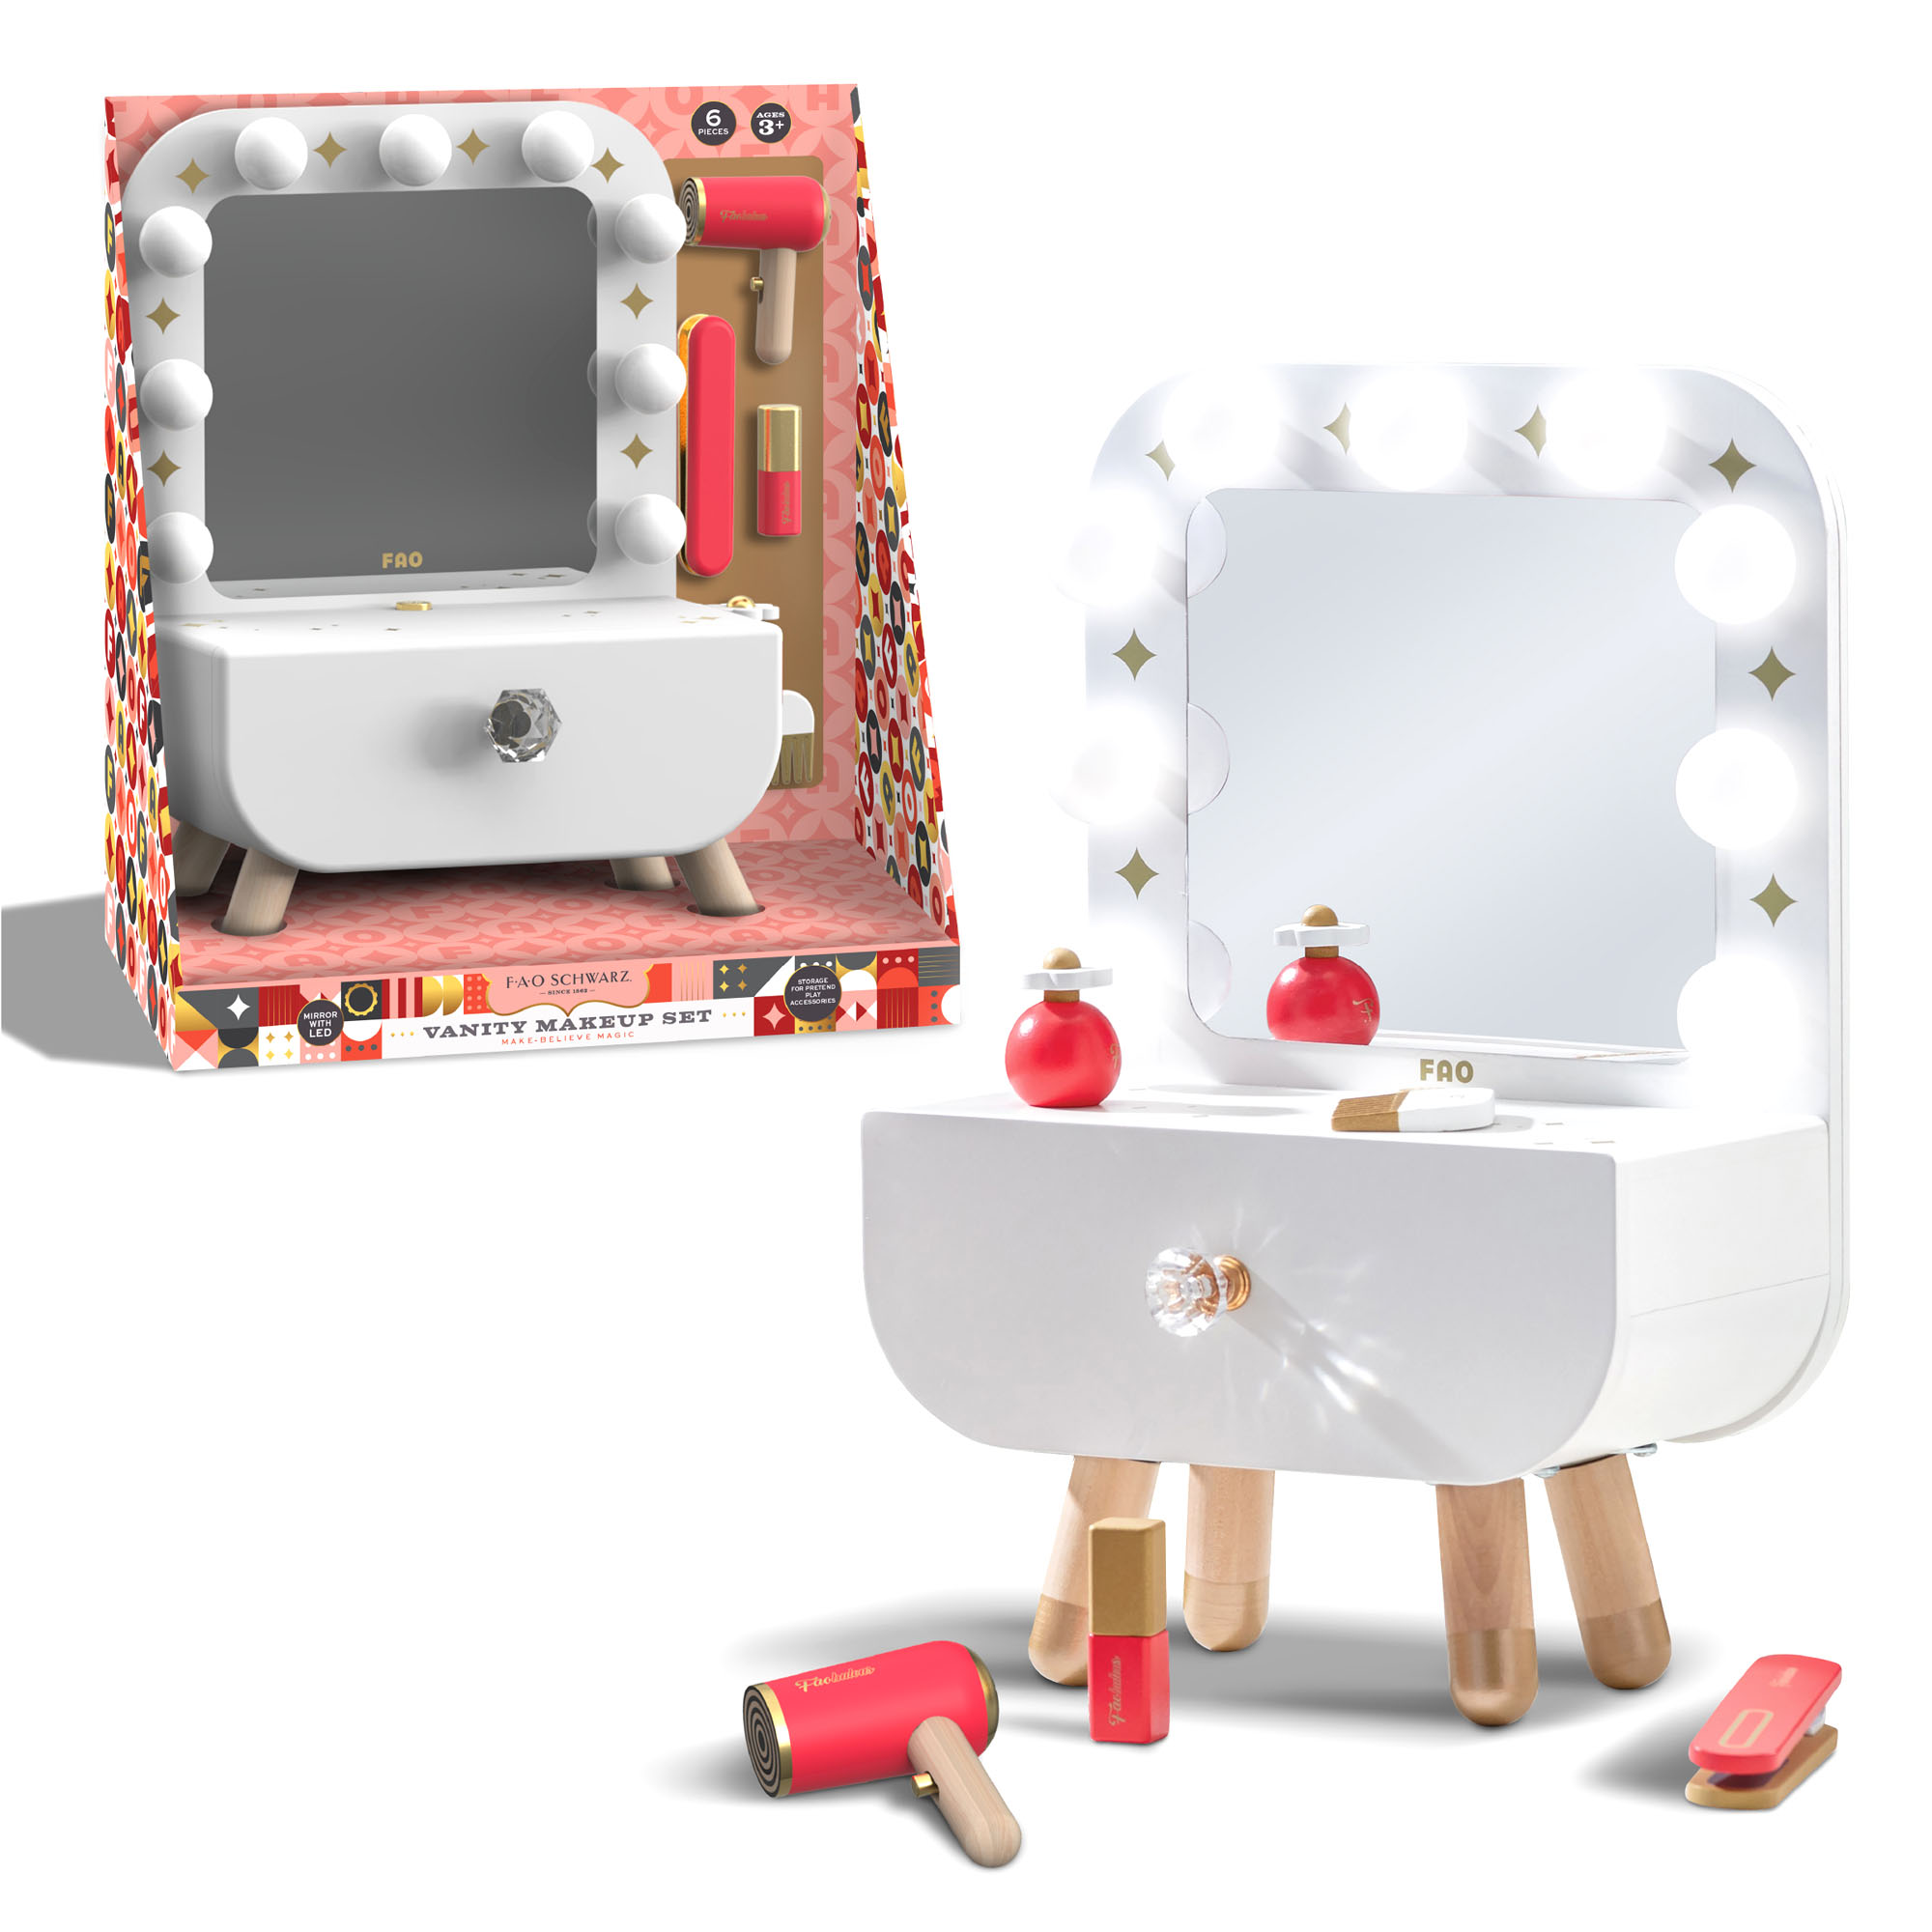 Set trucco vanity make-believe magic mirror - FAO Schwarz